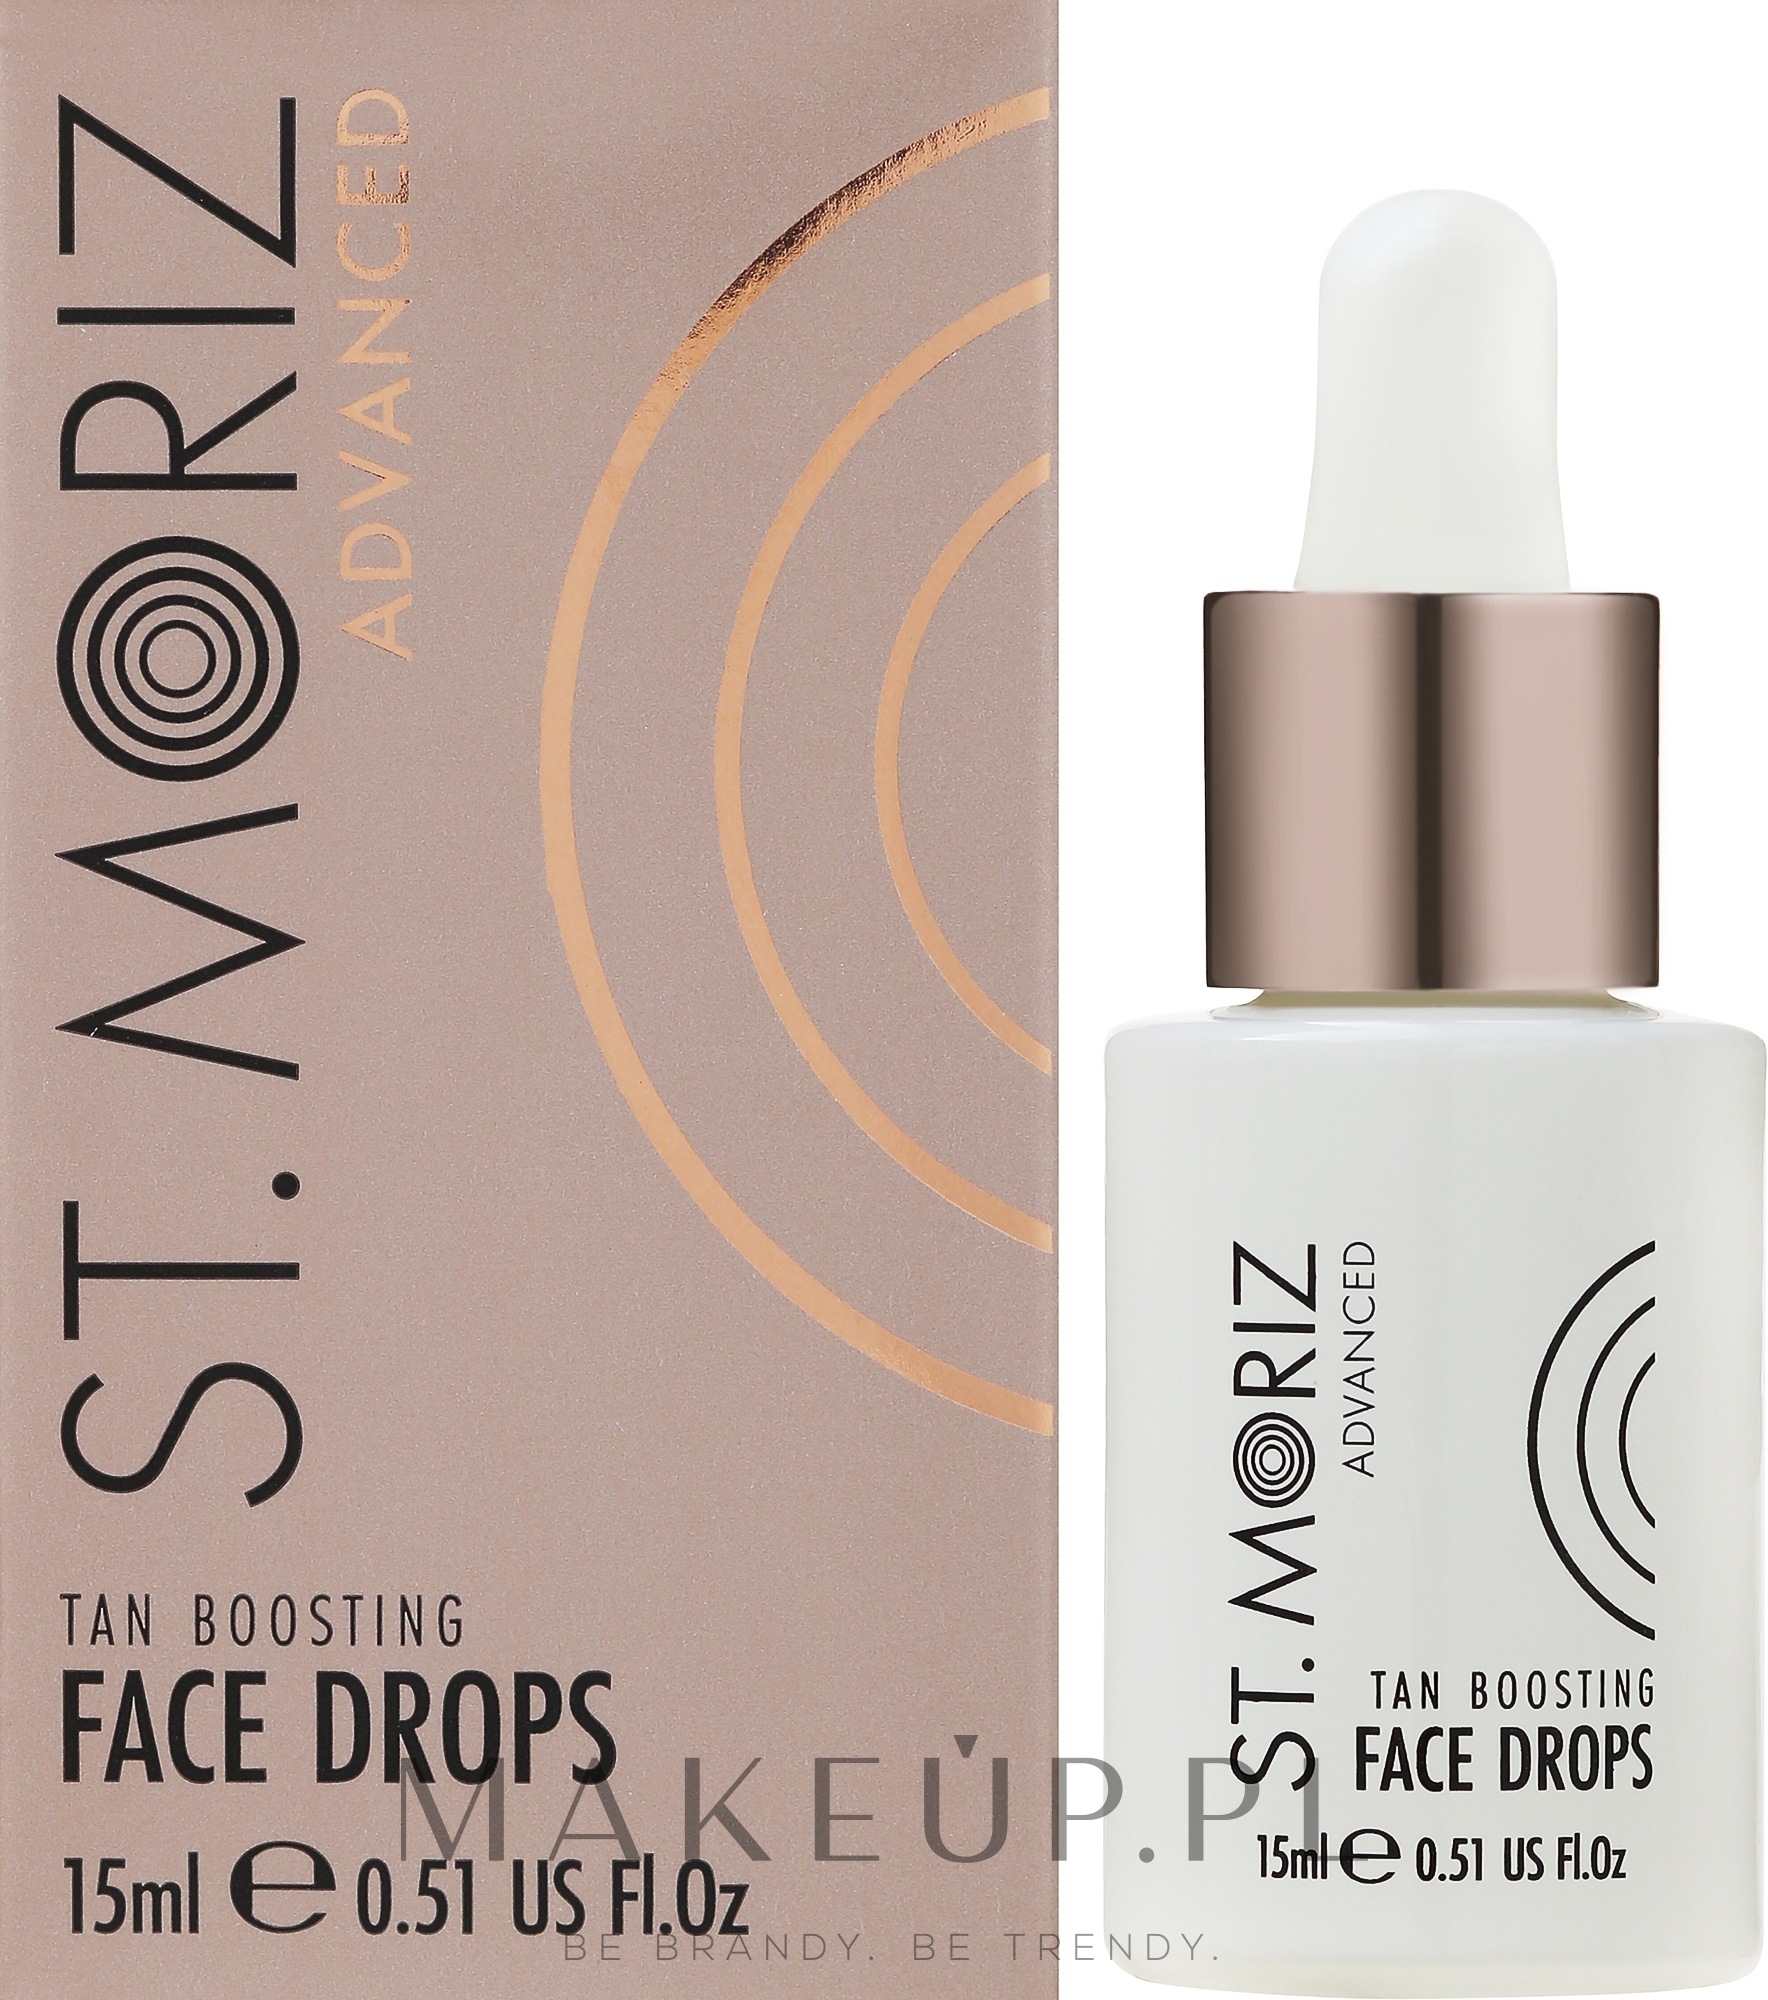 Serum do twarzy - St.Moriz Advanced Pro Formula Tan Boosting Facial Serum — Zdjęcie 15 ml